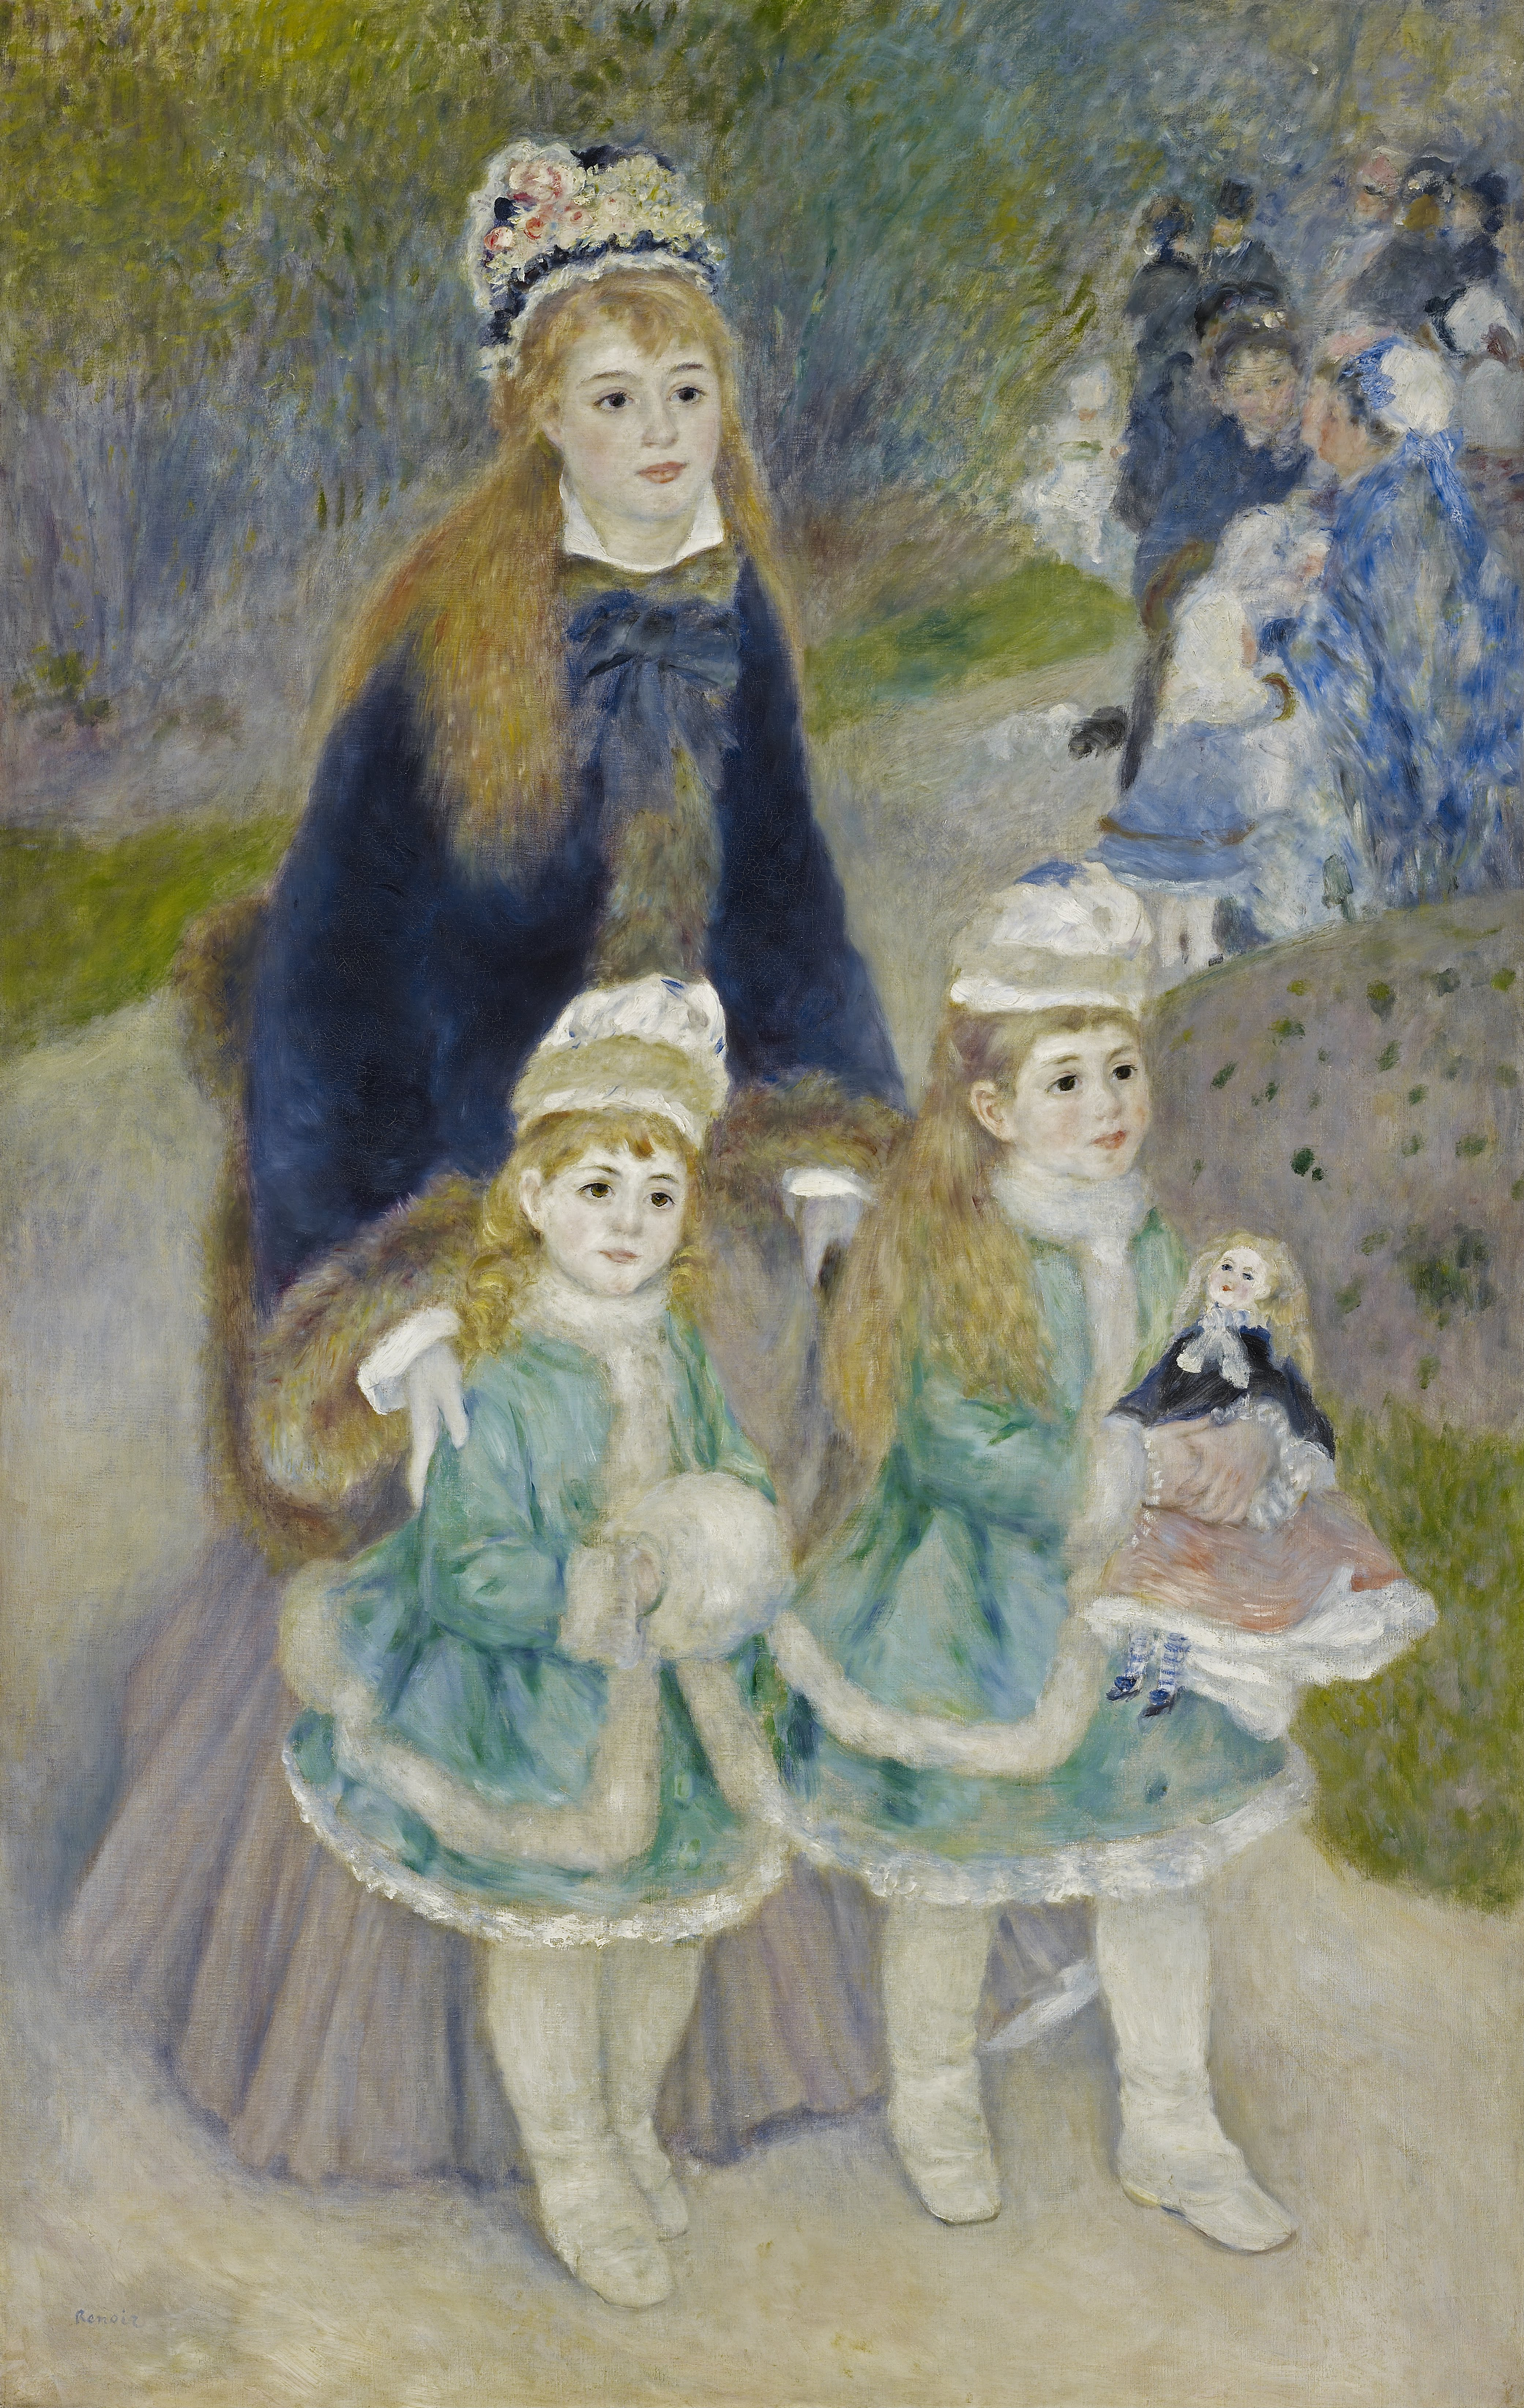 La Promenade by Pierre-Auguste Renoir - 1874-1876 - 170,2 x 108,3 cm 